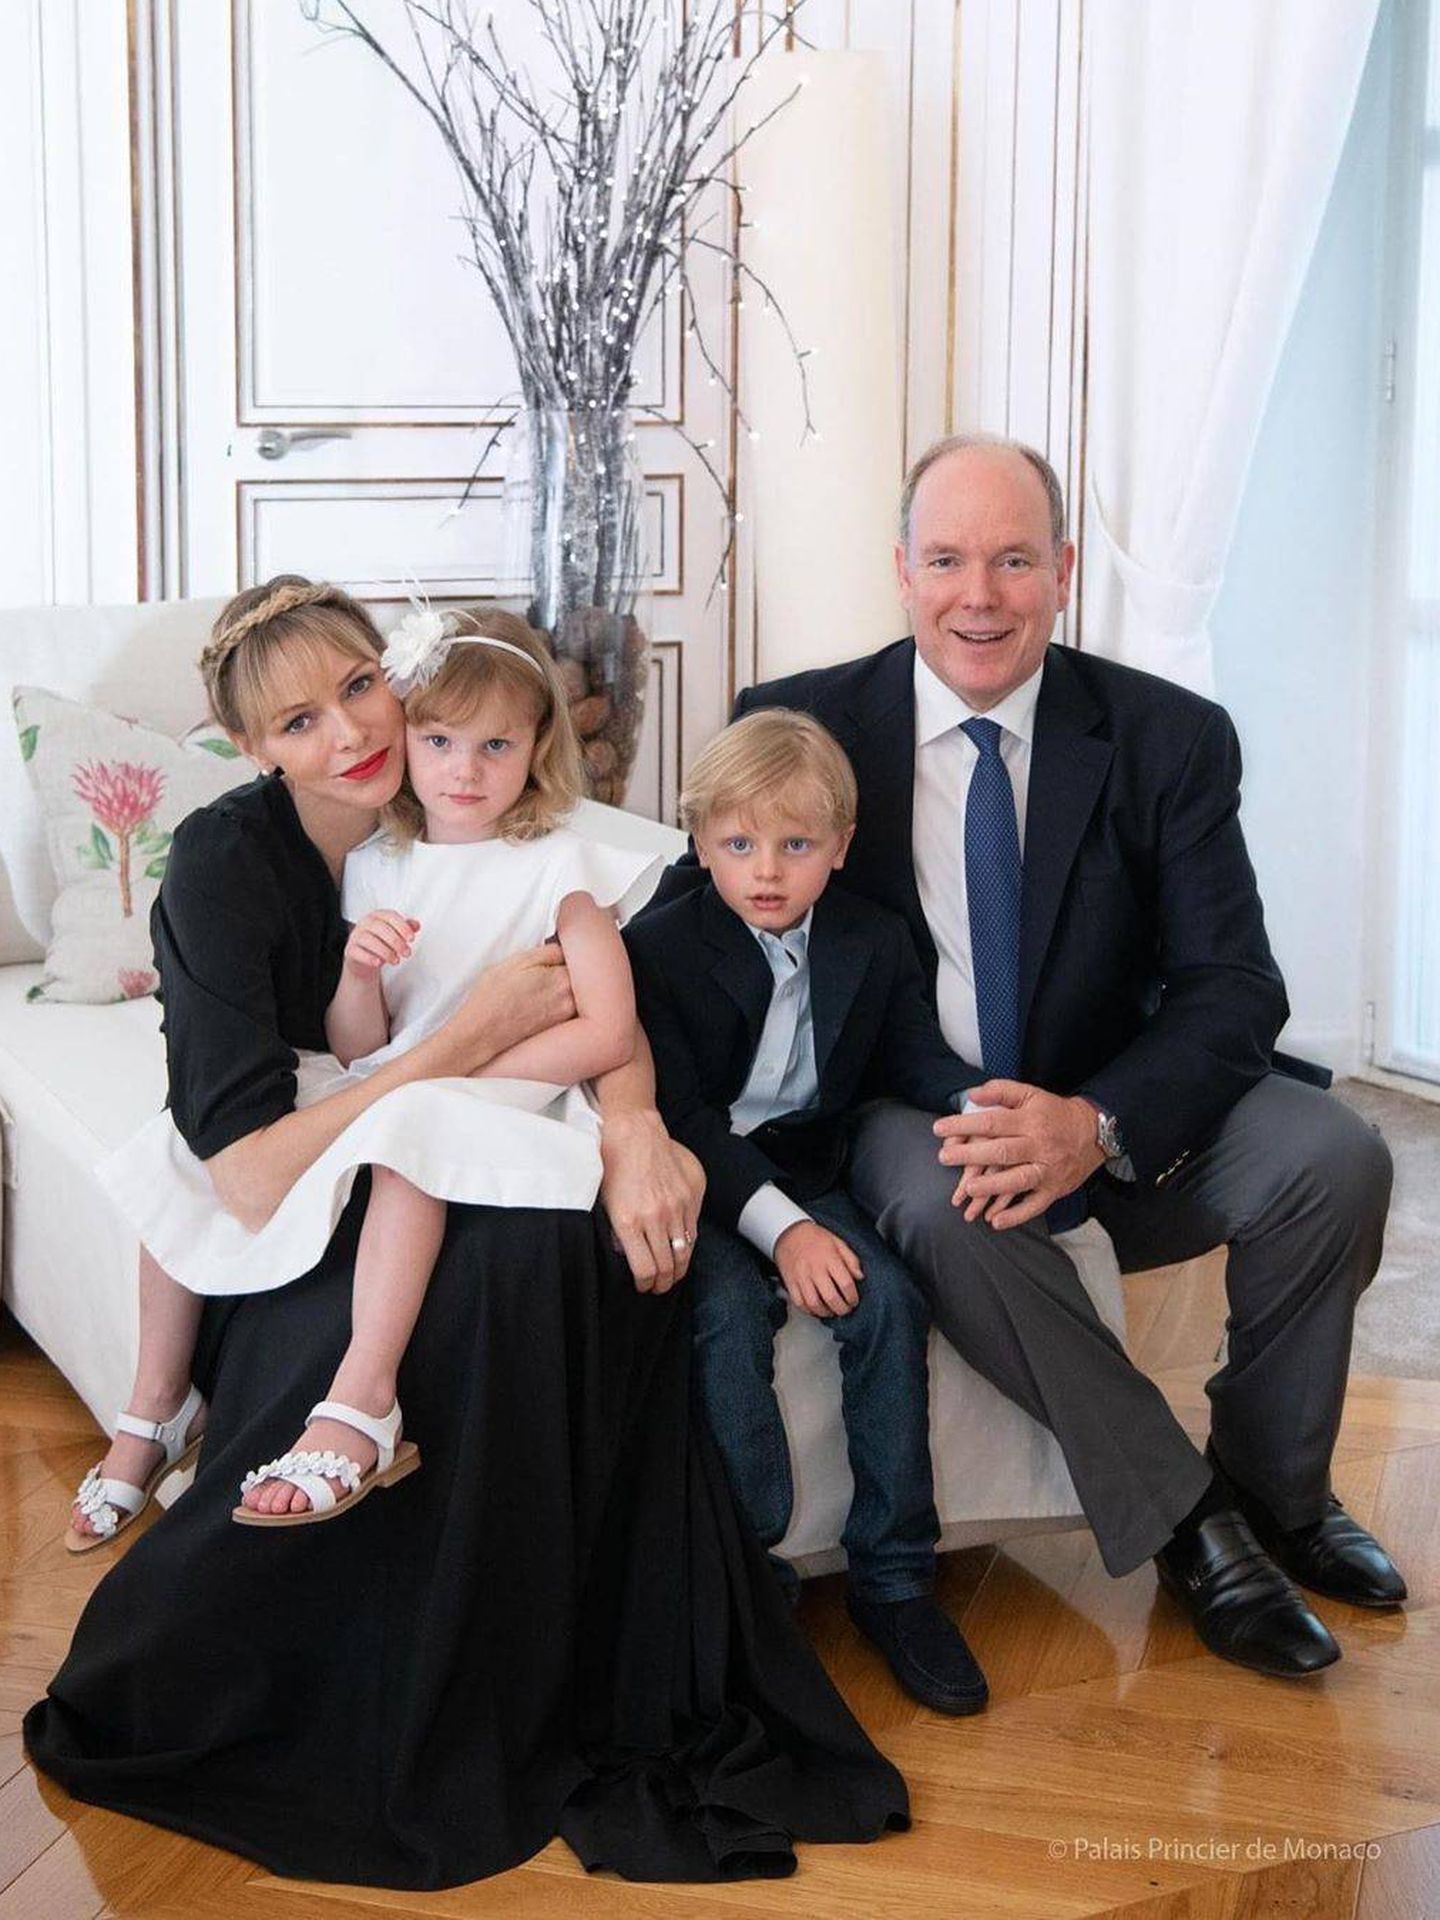 La familia real de Mónaco, al completo. (Eric Mathon / Palais Princier)